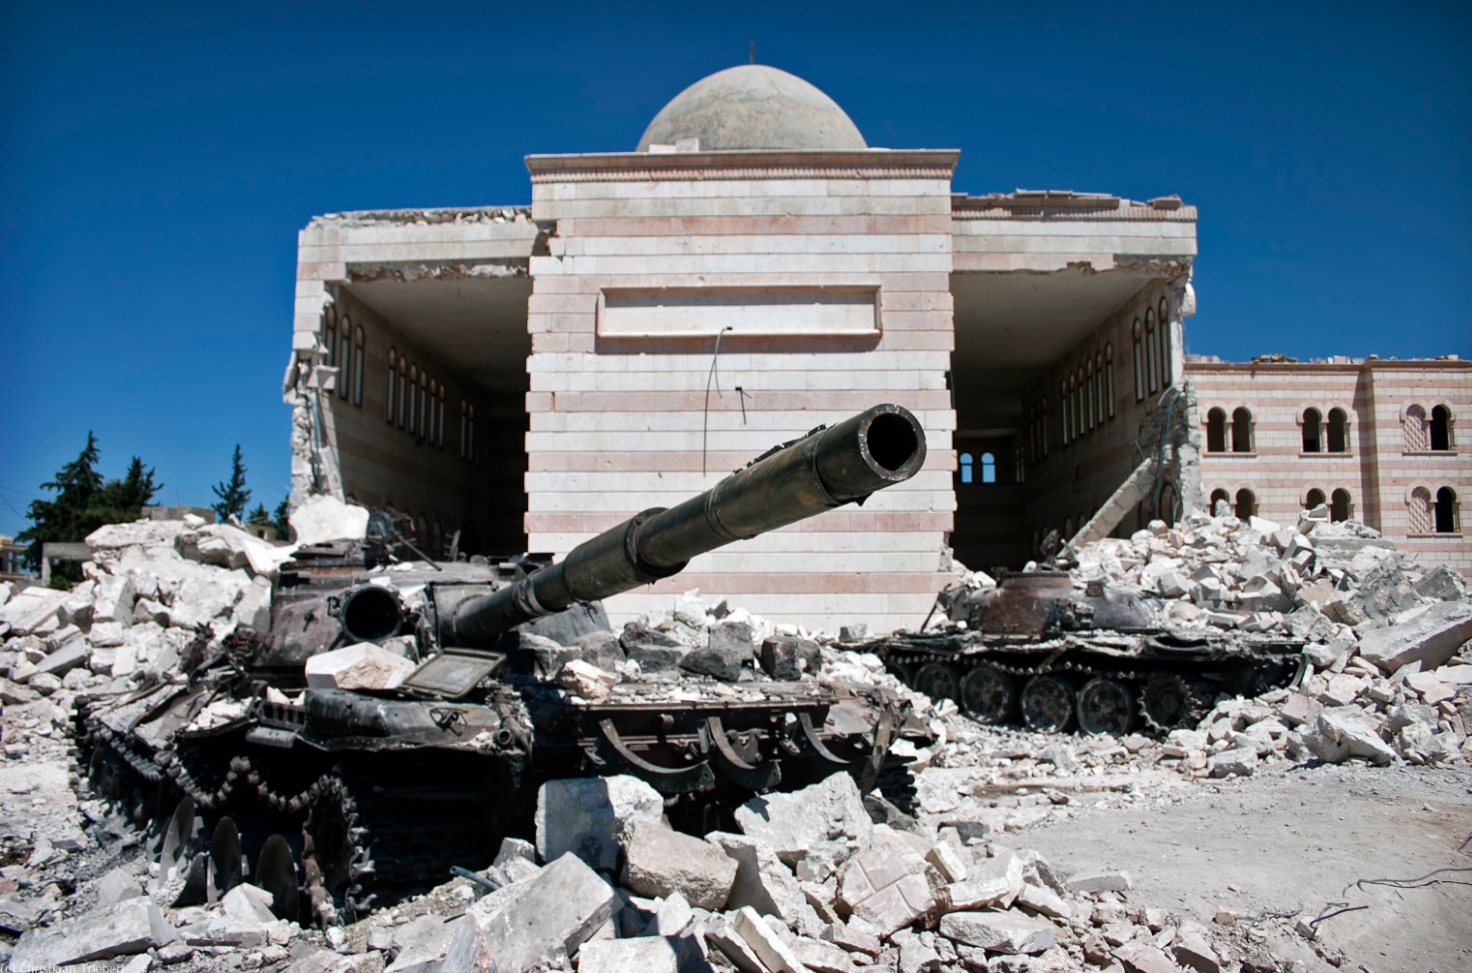 Big Banks rake in HUGE profits funding internationally banned weapons, cluster bombs deployed in Yemen, Syria